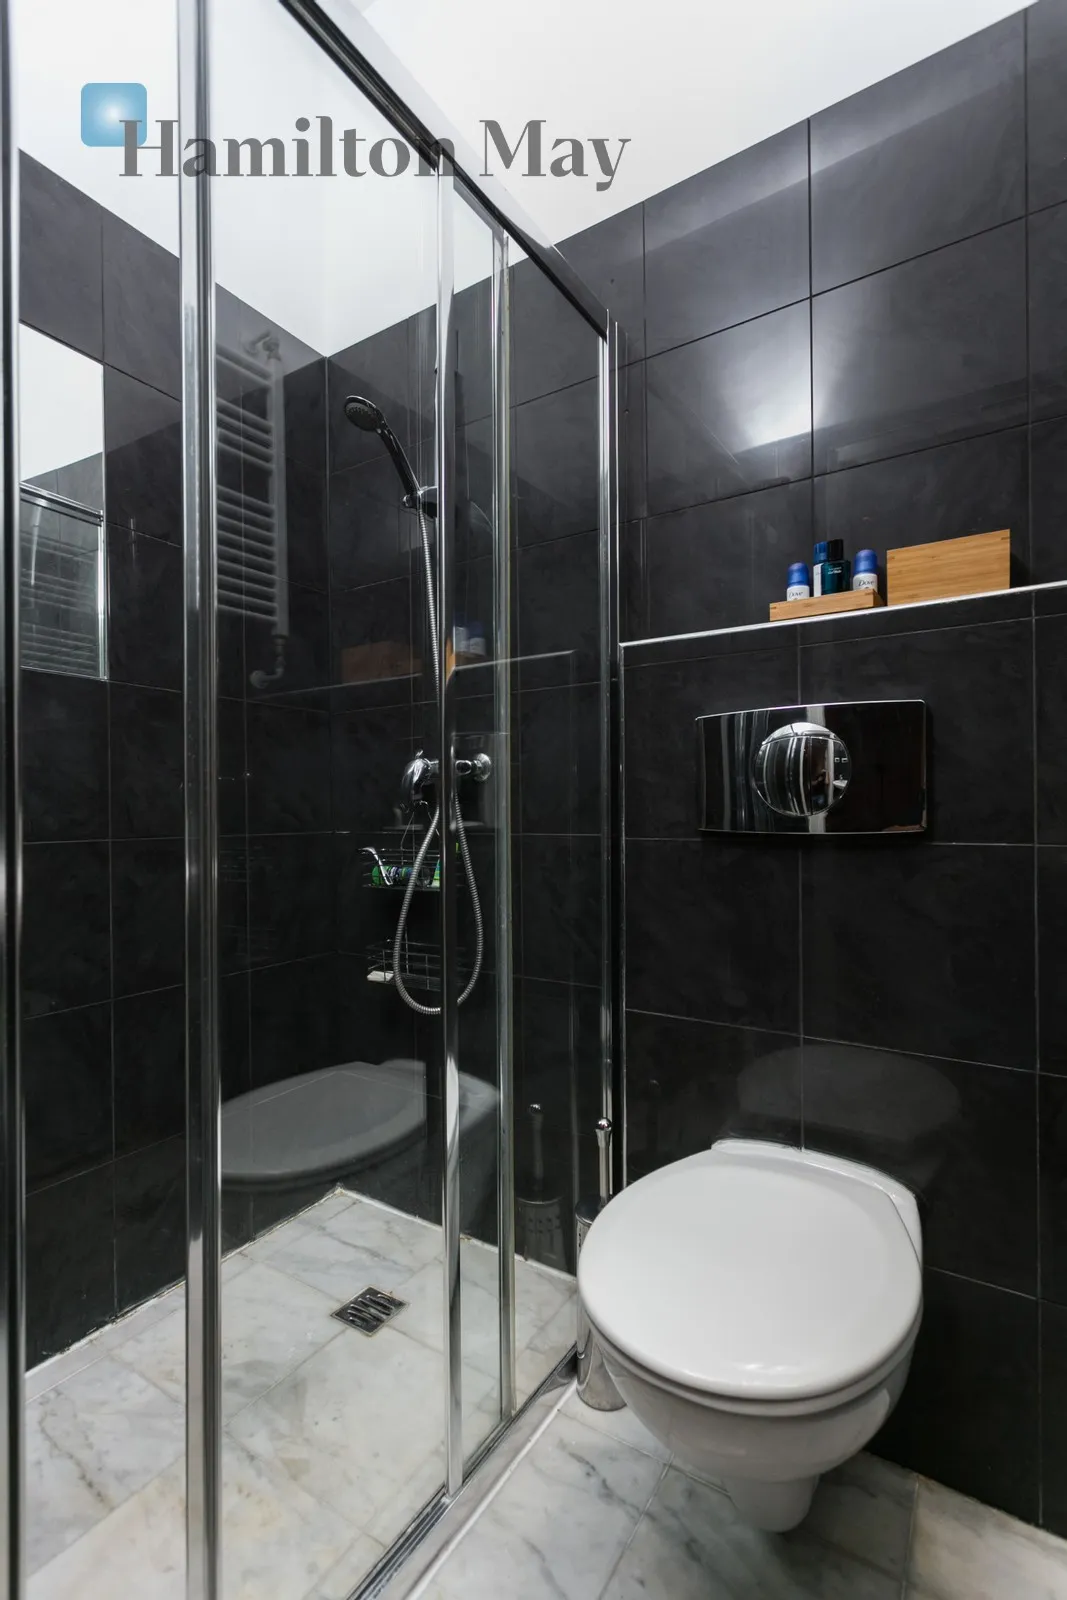 Level: 3 Price: 3500 PLN Bedrooms: 2 Bathrooms: 2 Size: 68m2 - slider